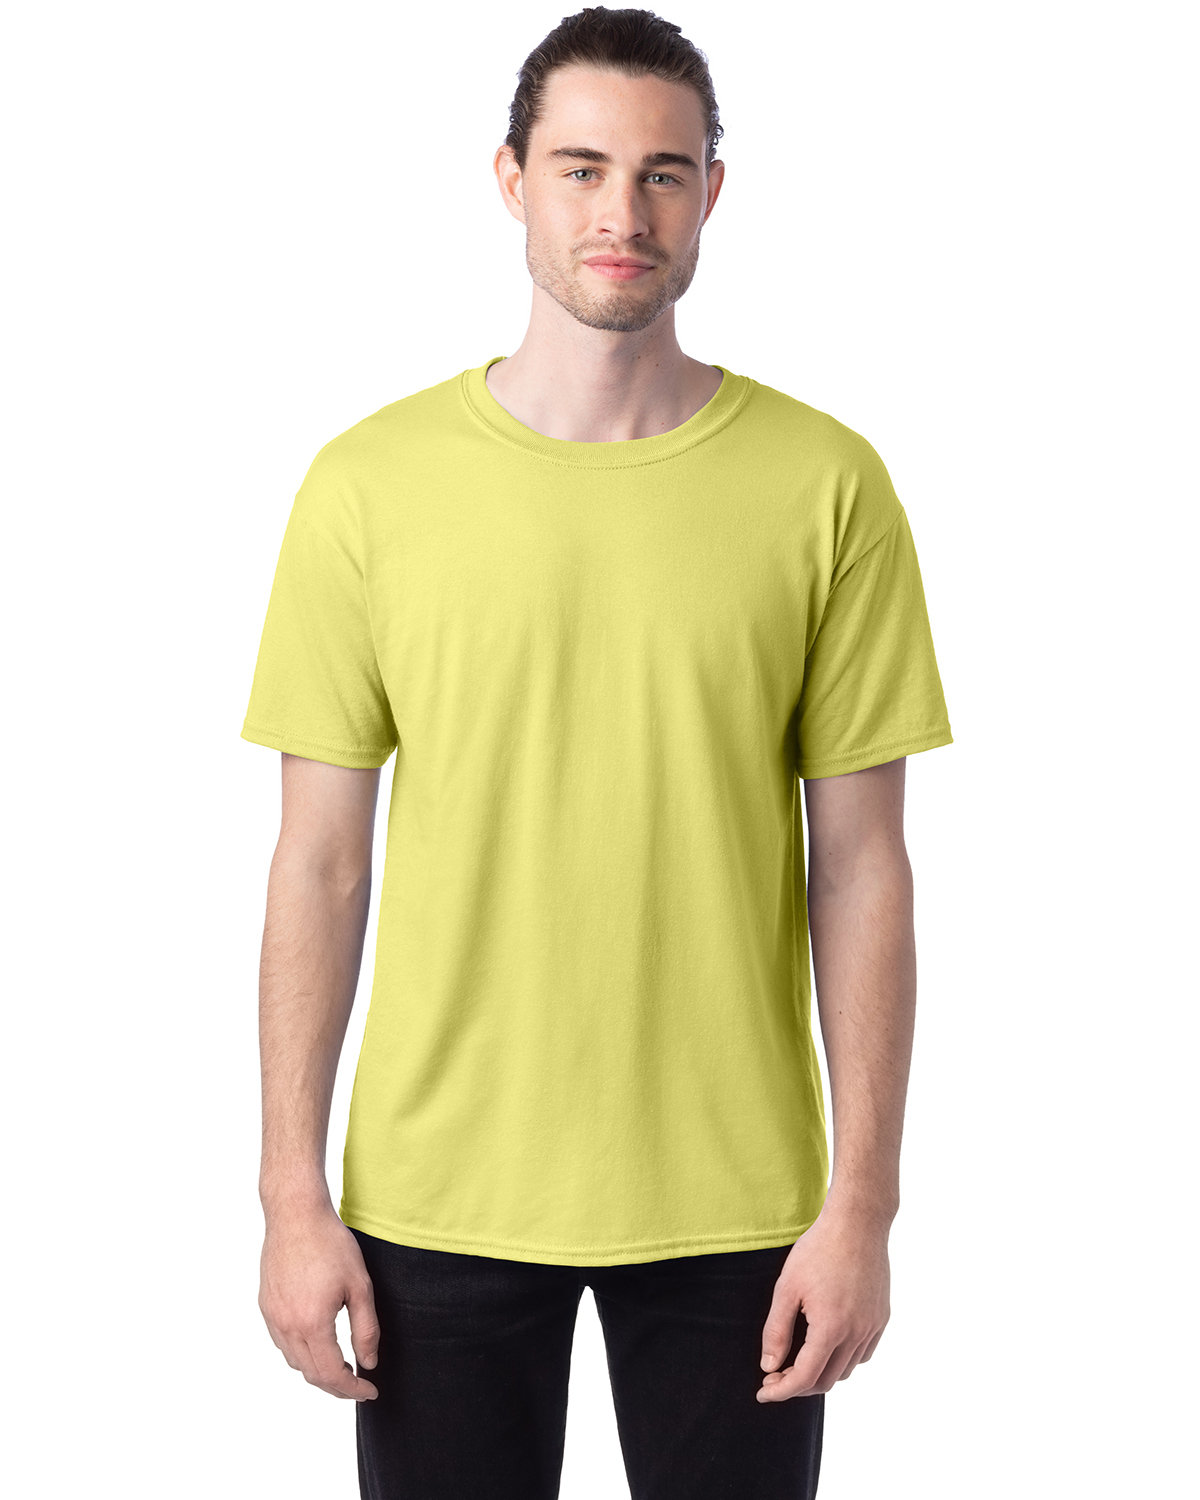 Hanes Unisex 50/50 T-Shirt YELLOW 